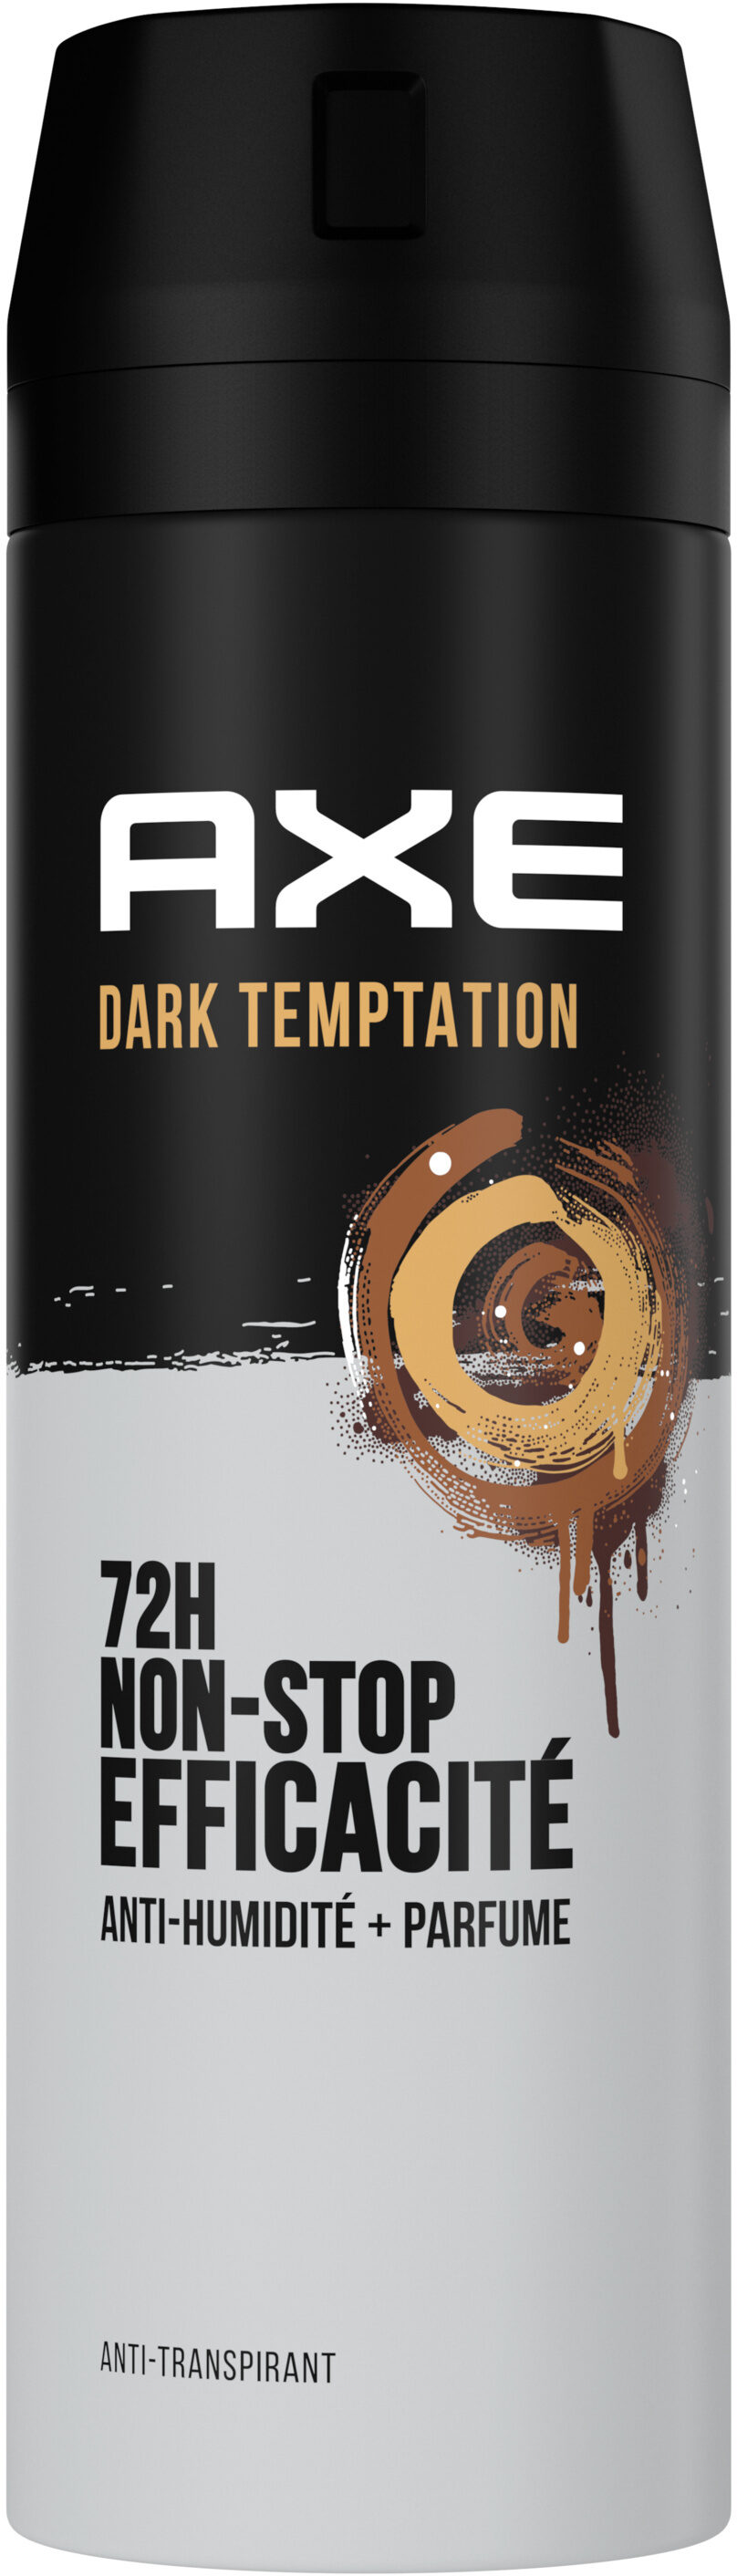 AXE Anti-Transpirant Homme Dark Temptation 72h Anti-Humidité 200ml - Tuote - fr